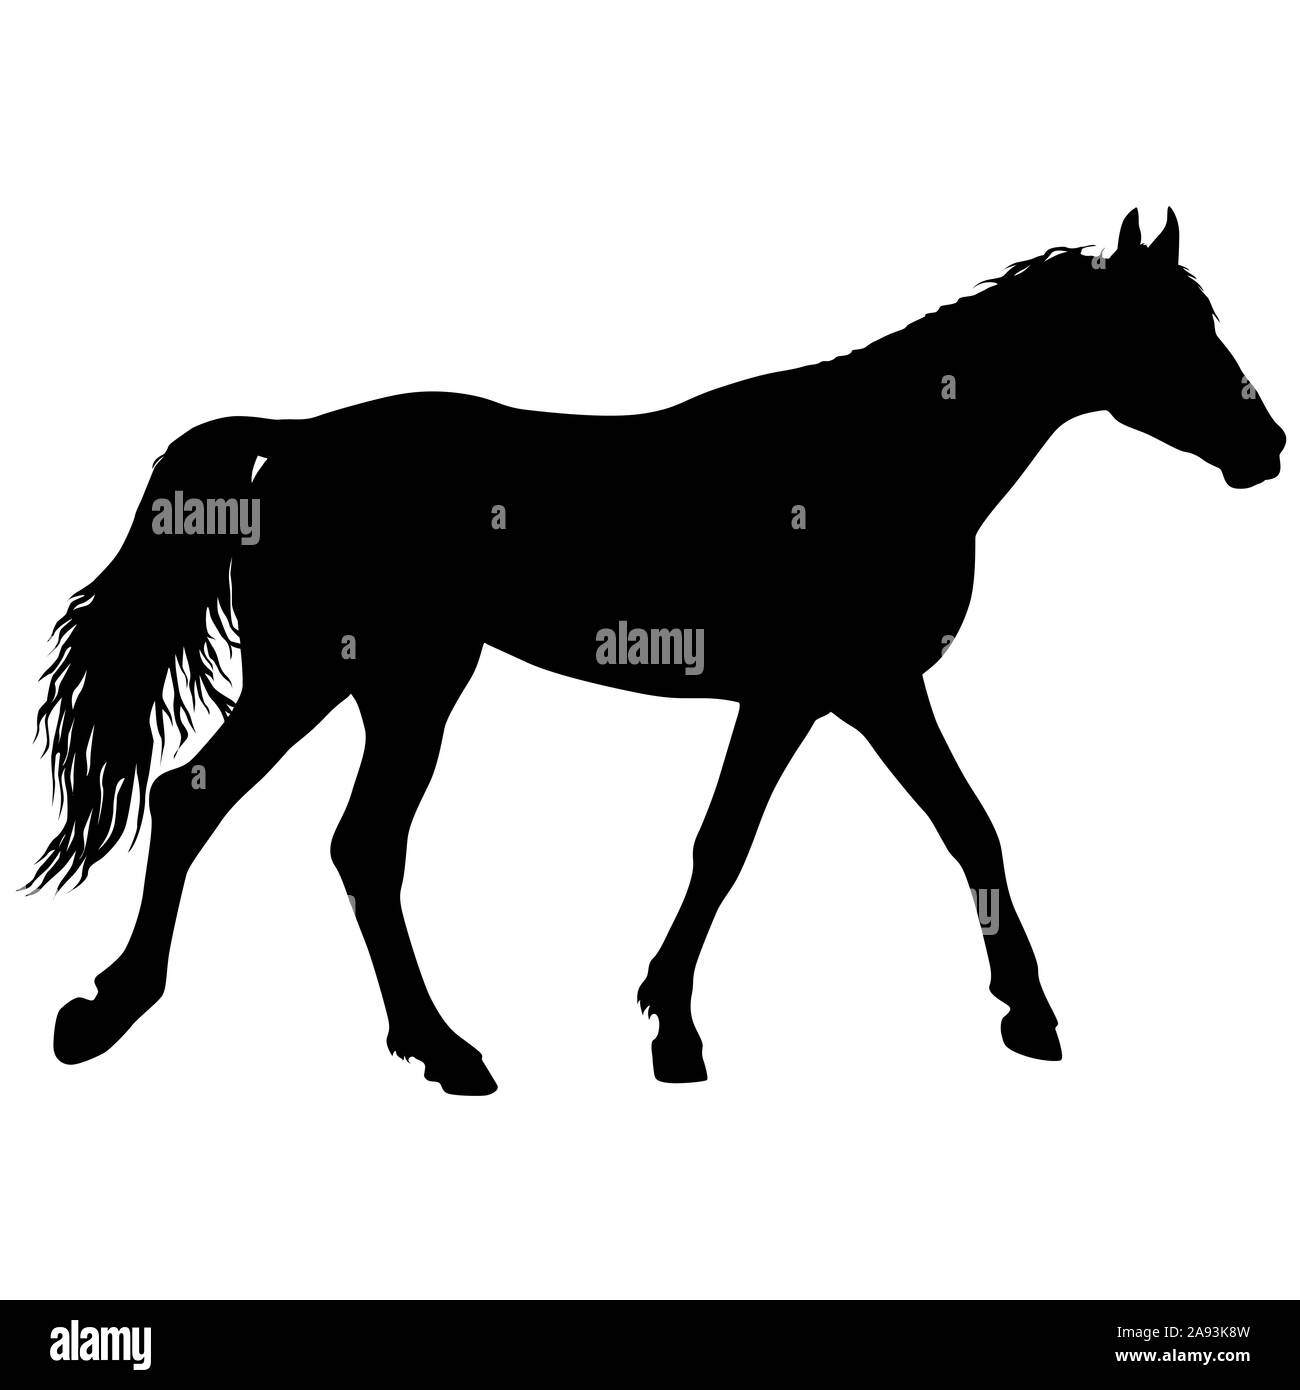 Animal silhouette of black mustang horse illustration. Stock Photo